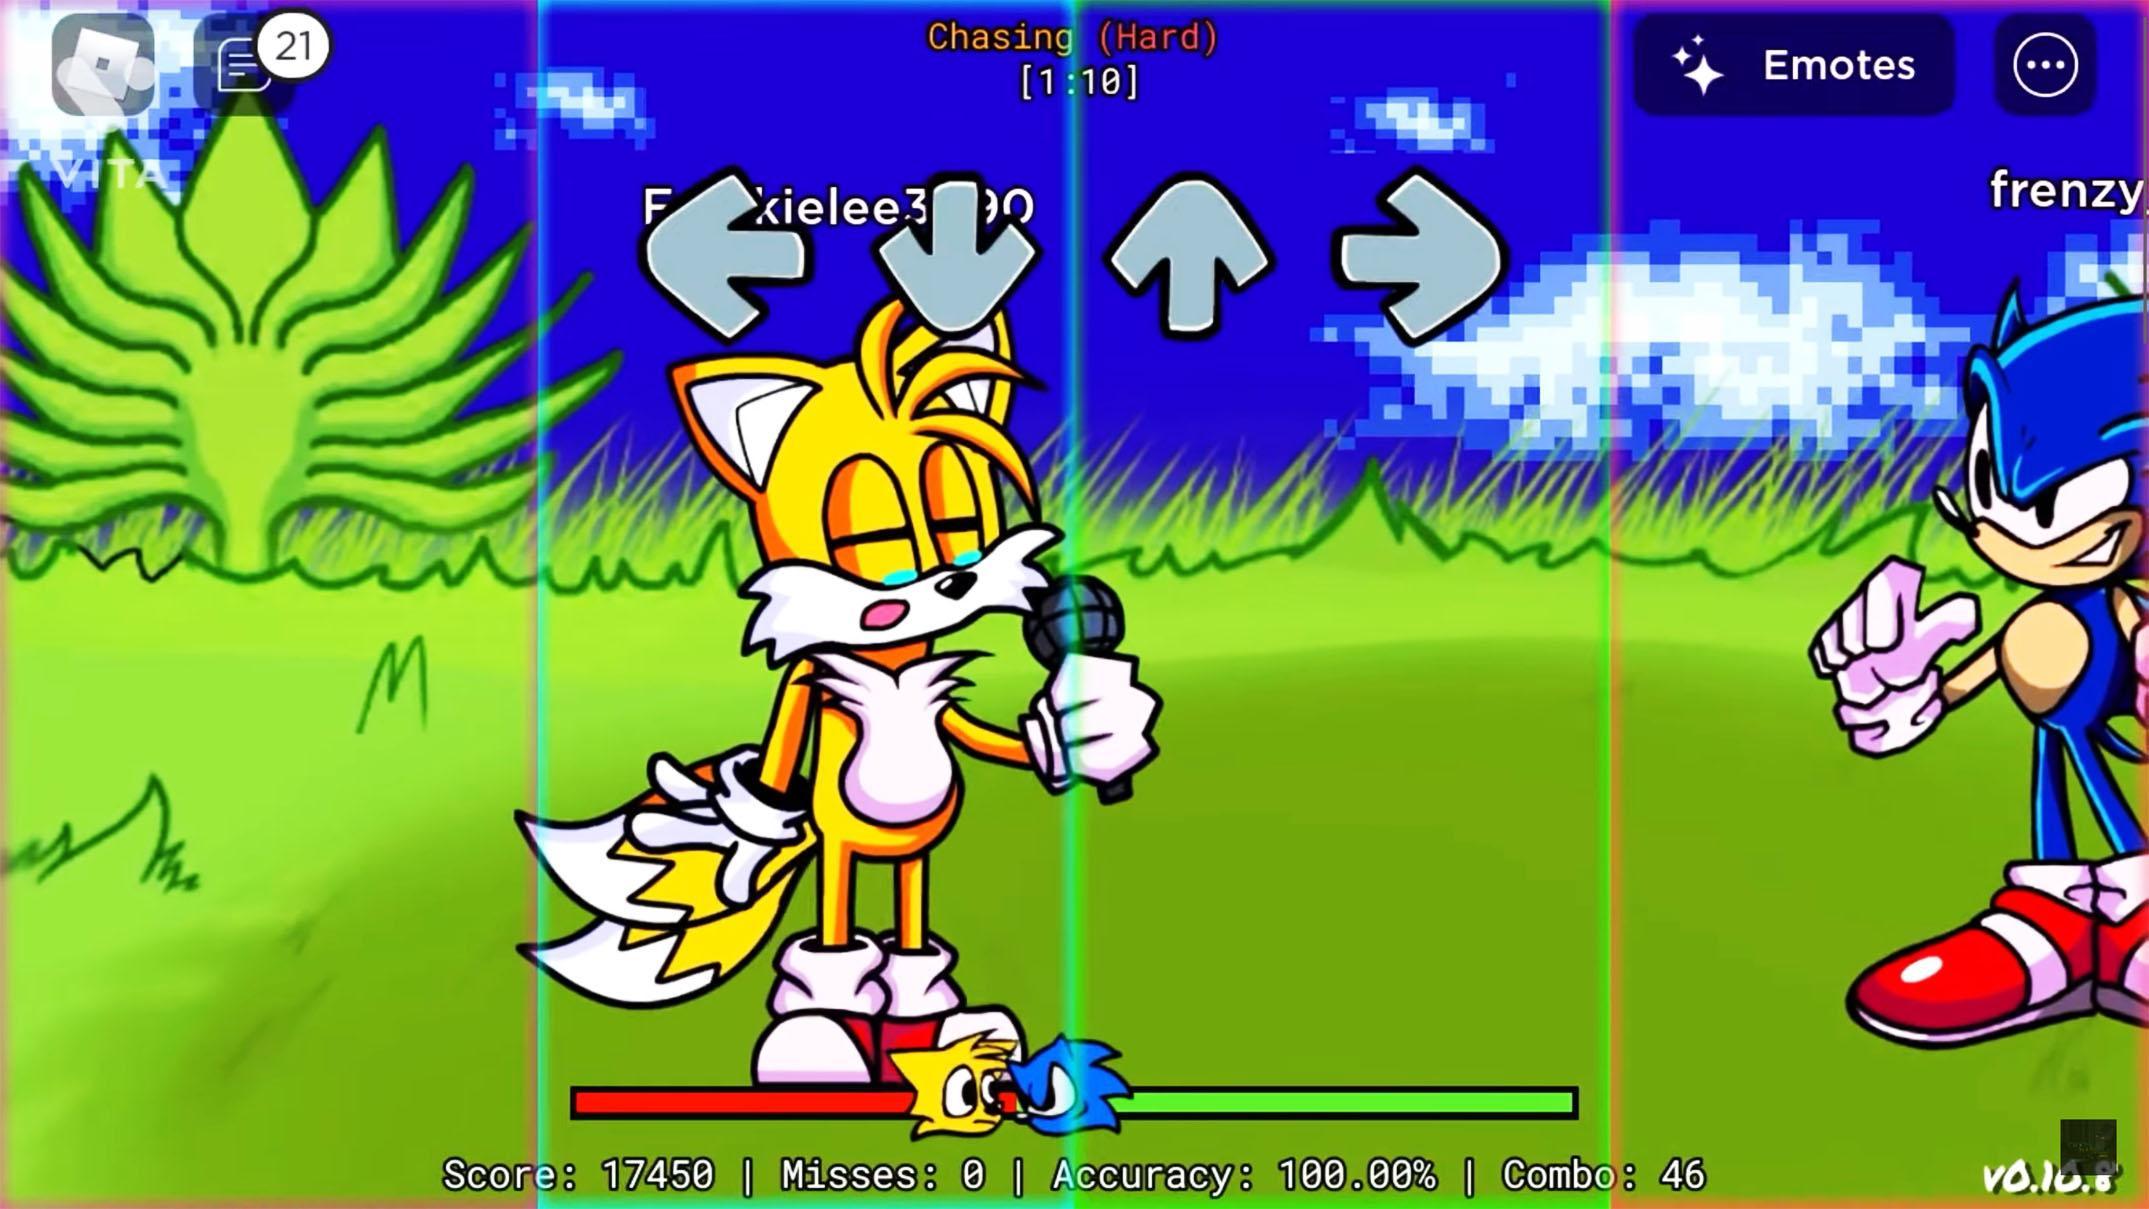 FNF, Tails Vs Sonic - New Chasing, Vs Tails.Exe V2, Mods/Hard/Gameplay